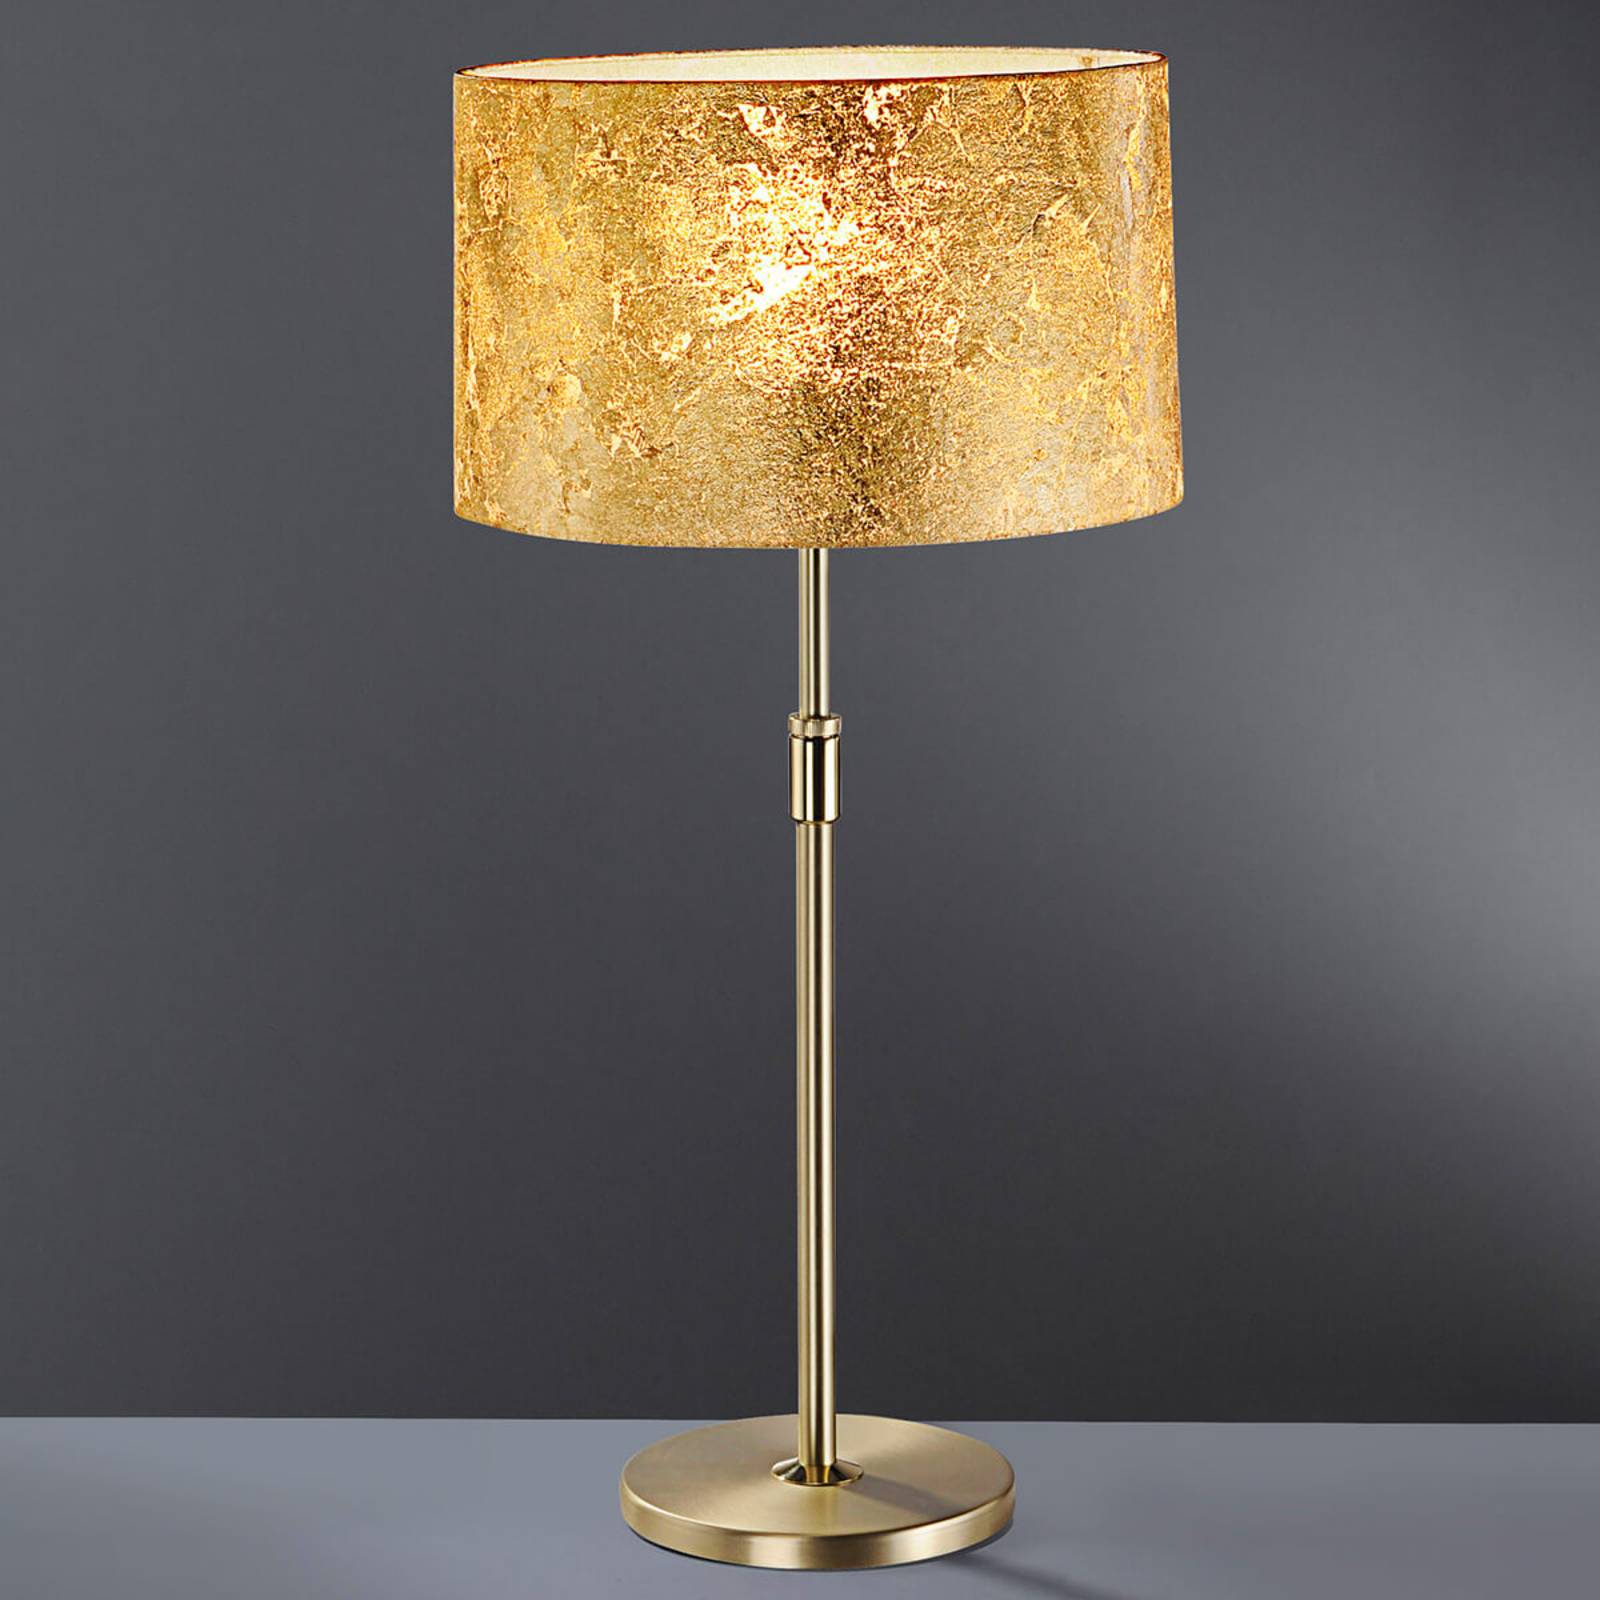 Lampe à poser Loop feuille d'or 55 - 75 cm de haut